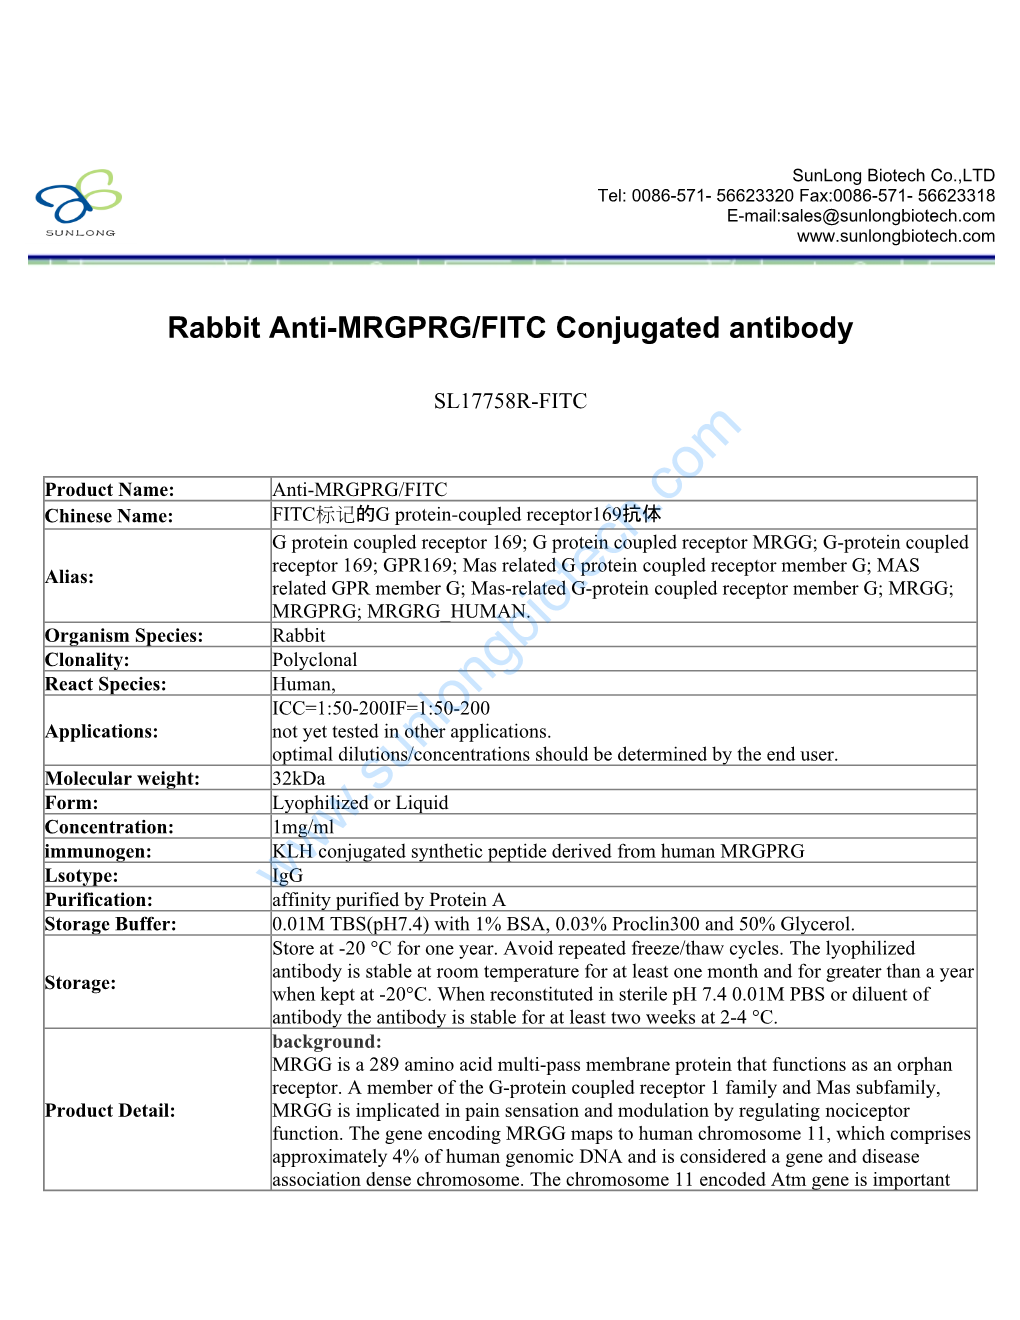 Rabbit Anti-MRGPRG/FITC Conjugated Antibody-SL17758R